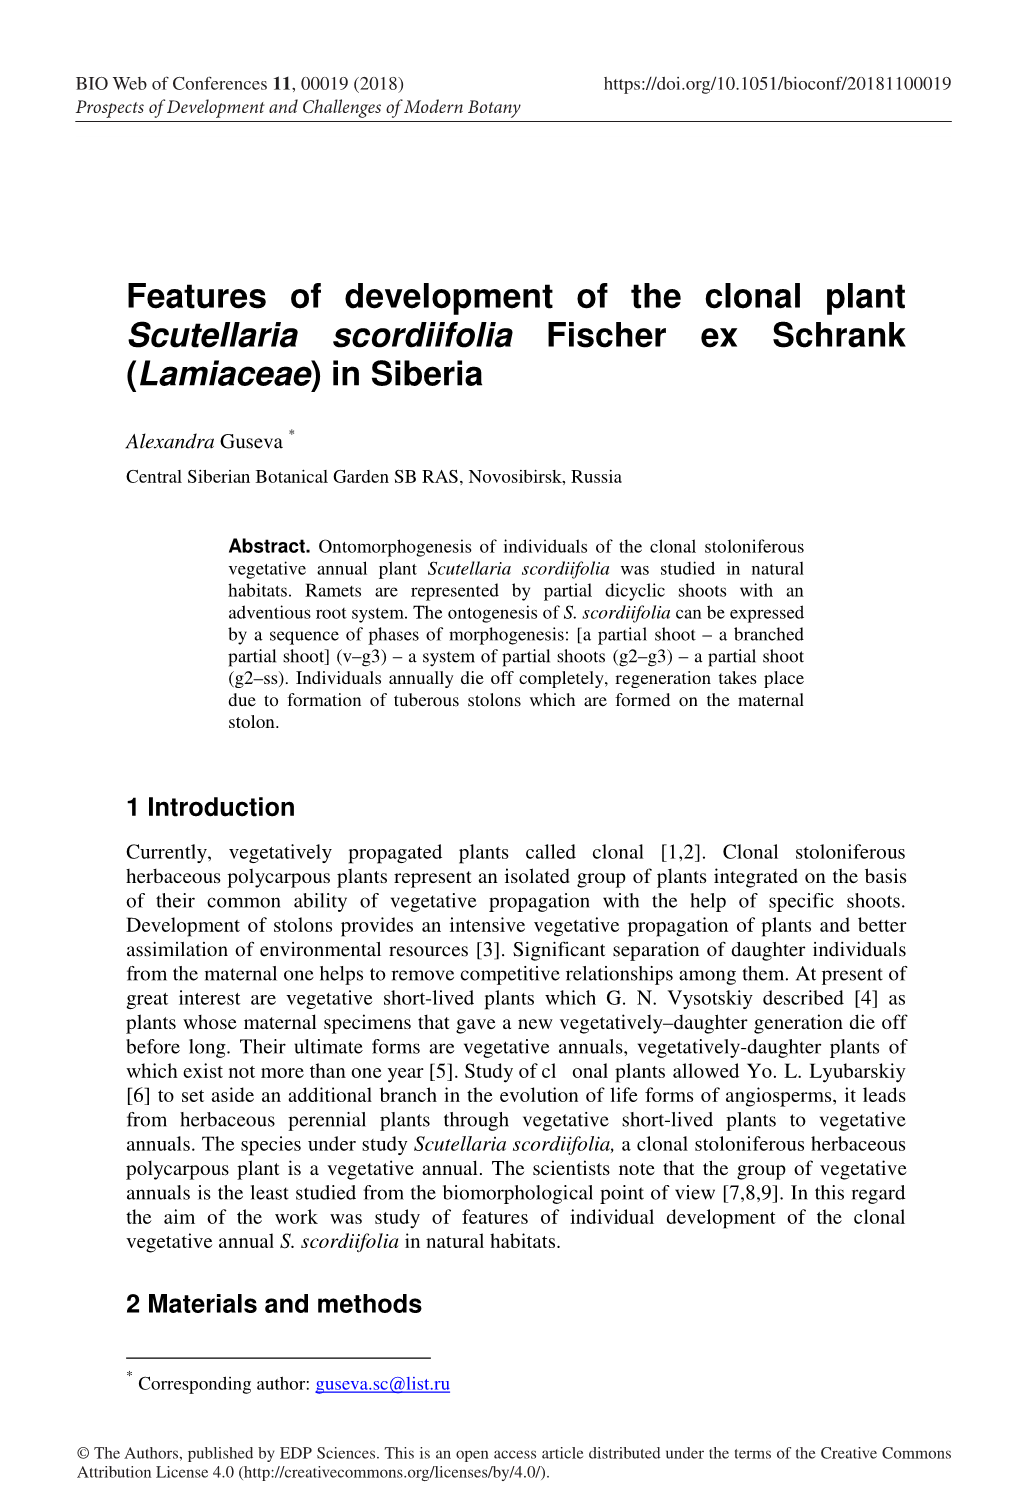 Features of Development of the Clonal Plant Scutellaria Scordiifolia Fischer Ex Schrank (Lamiaceae) in Siberia